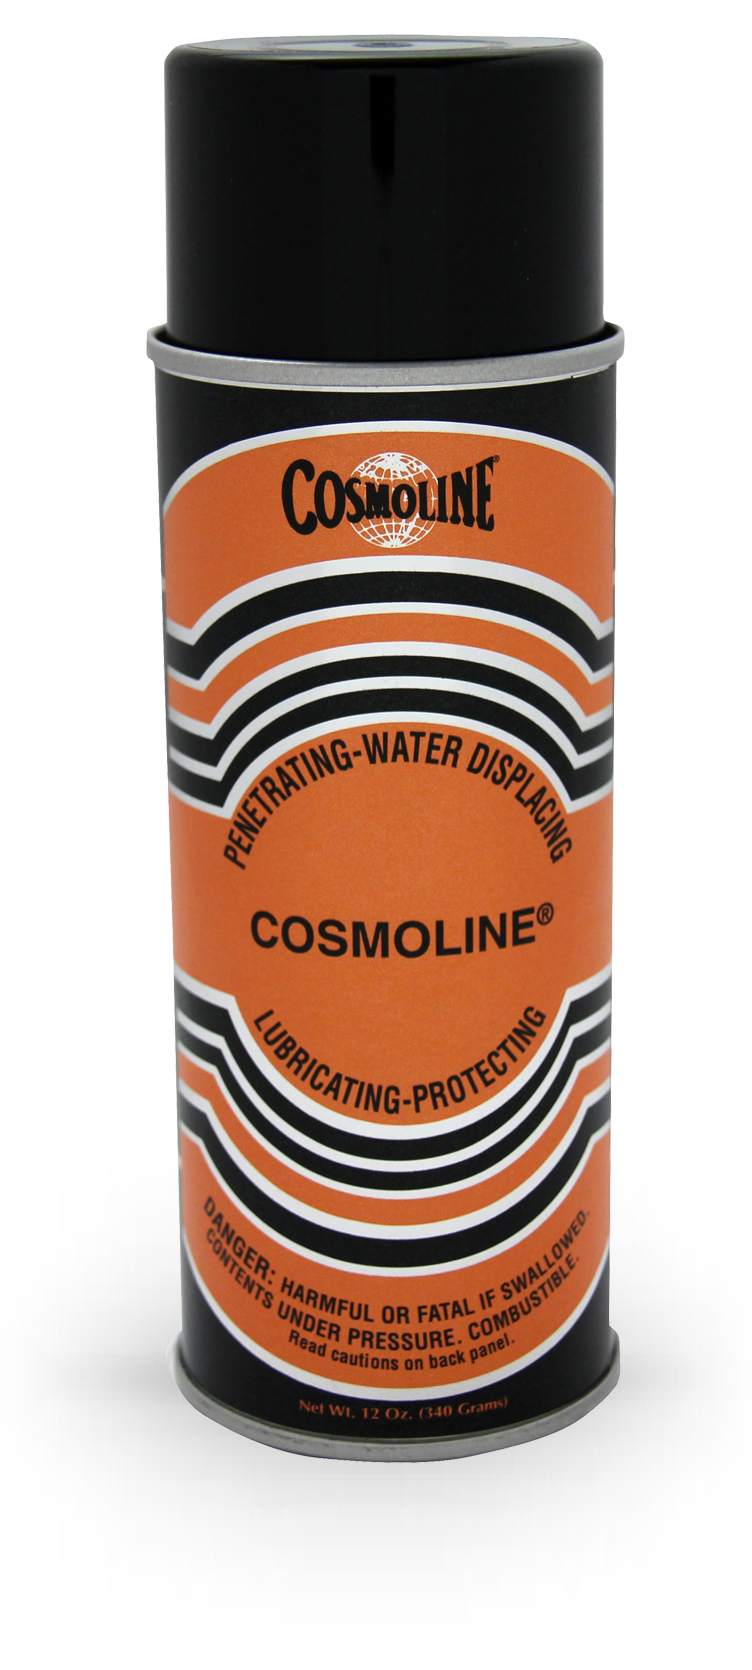 Cosmoline Product